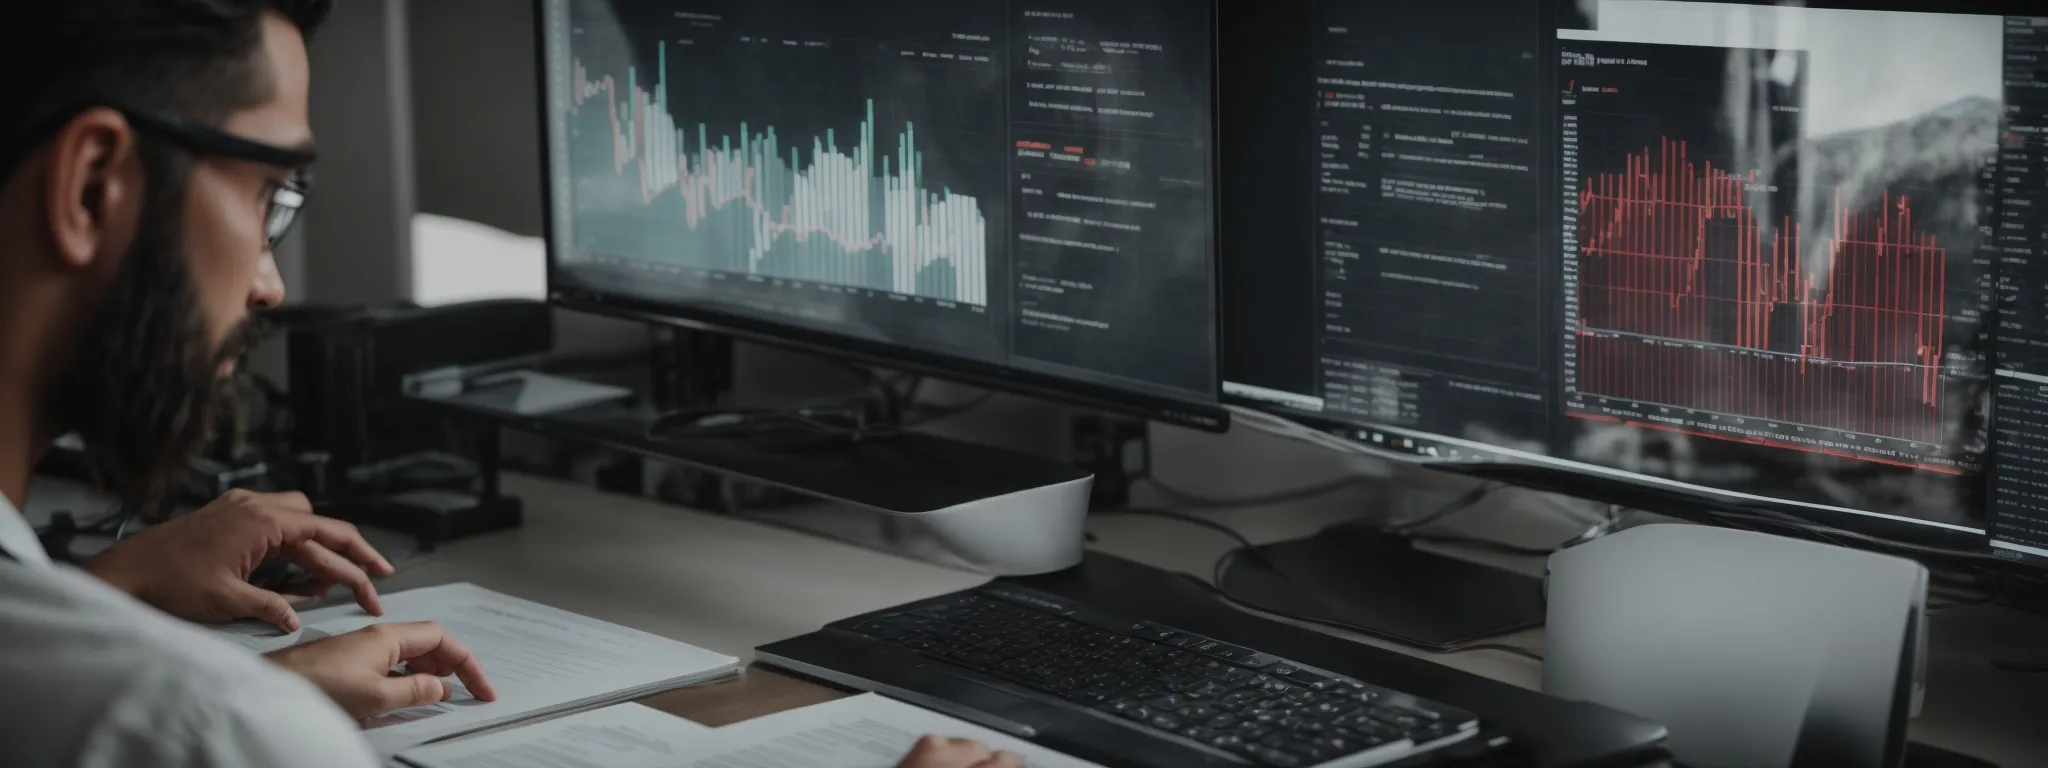 a digital marketer analyzes seo performance metrics on a computer screen in a modern office.